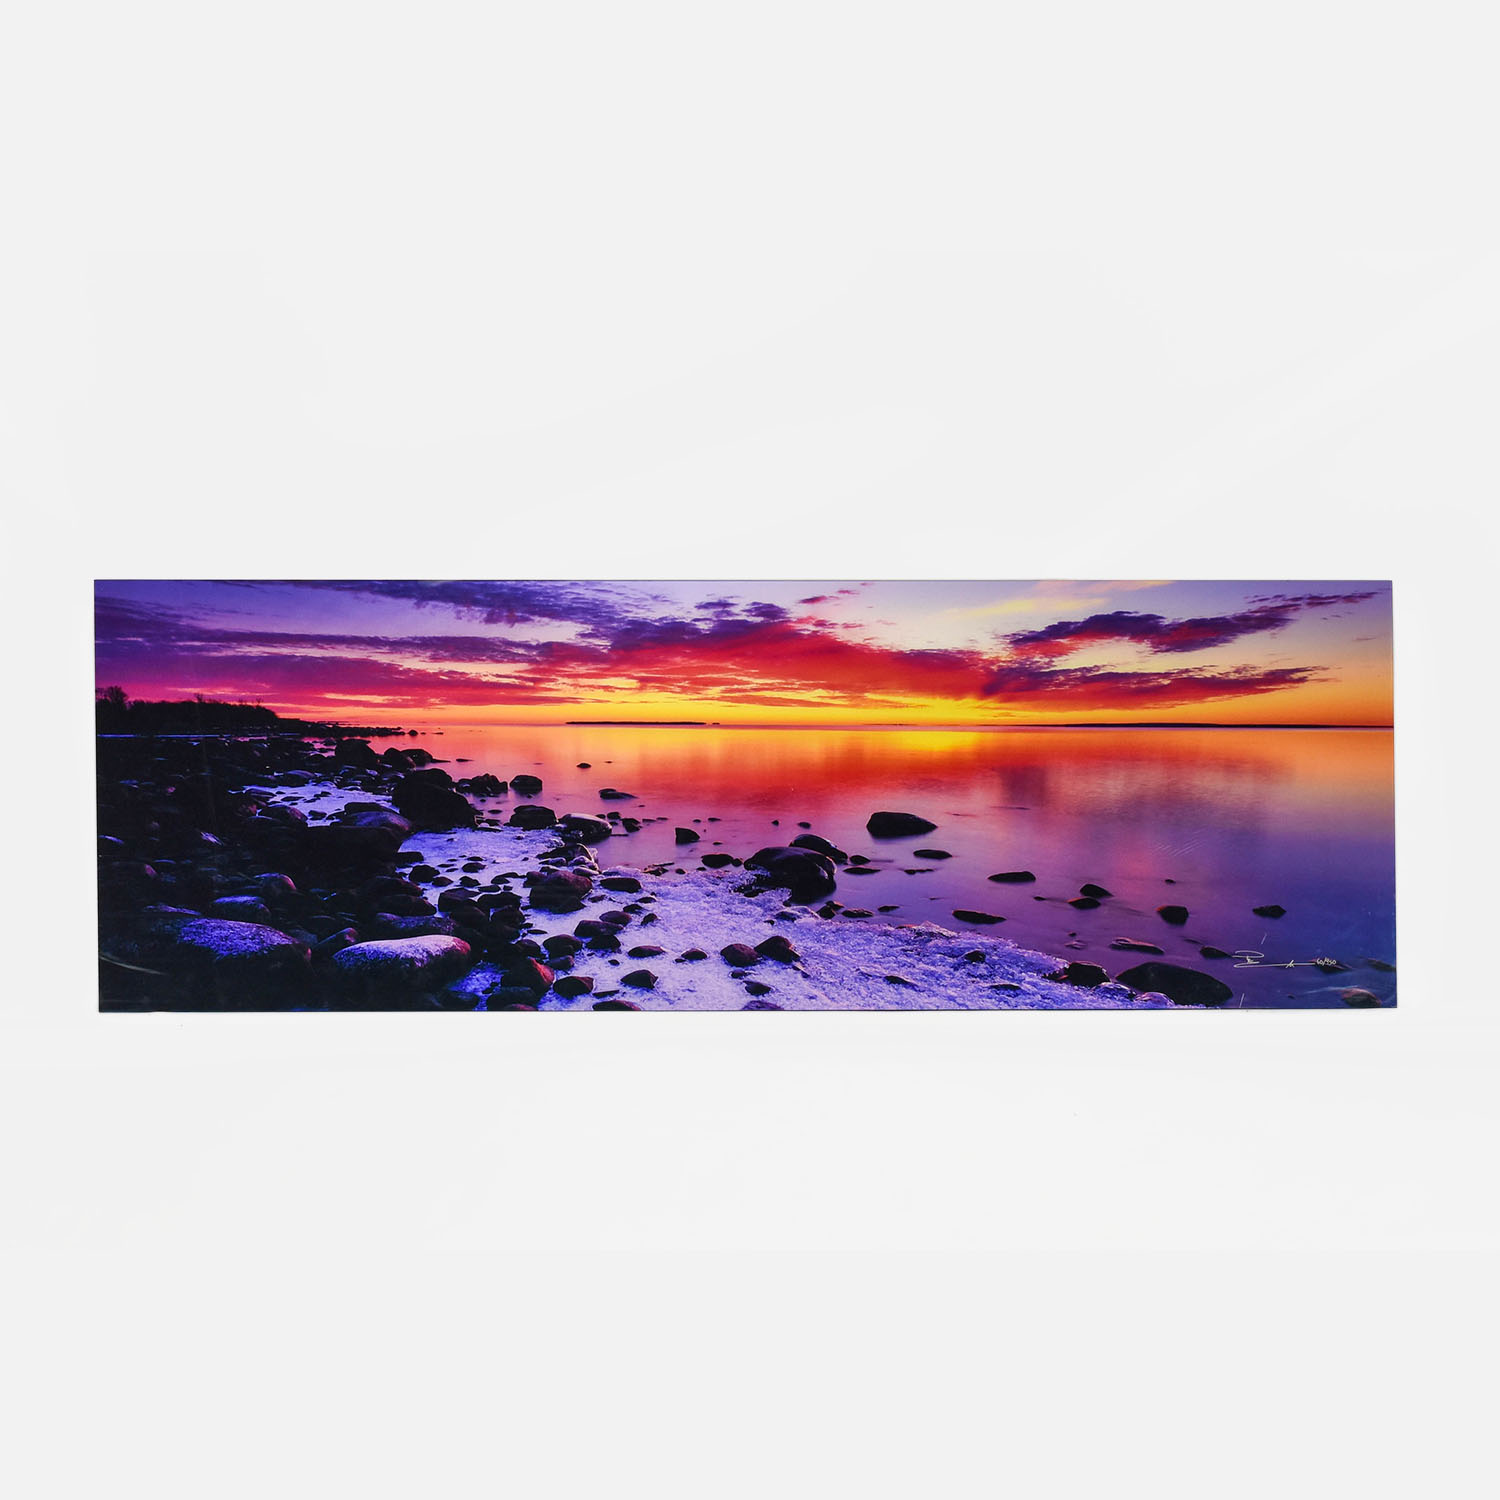 Lik, Peter Landscape Photograph on Acrylic Beach Sunset 60/950